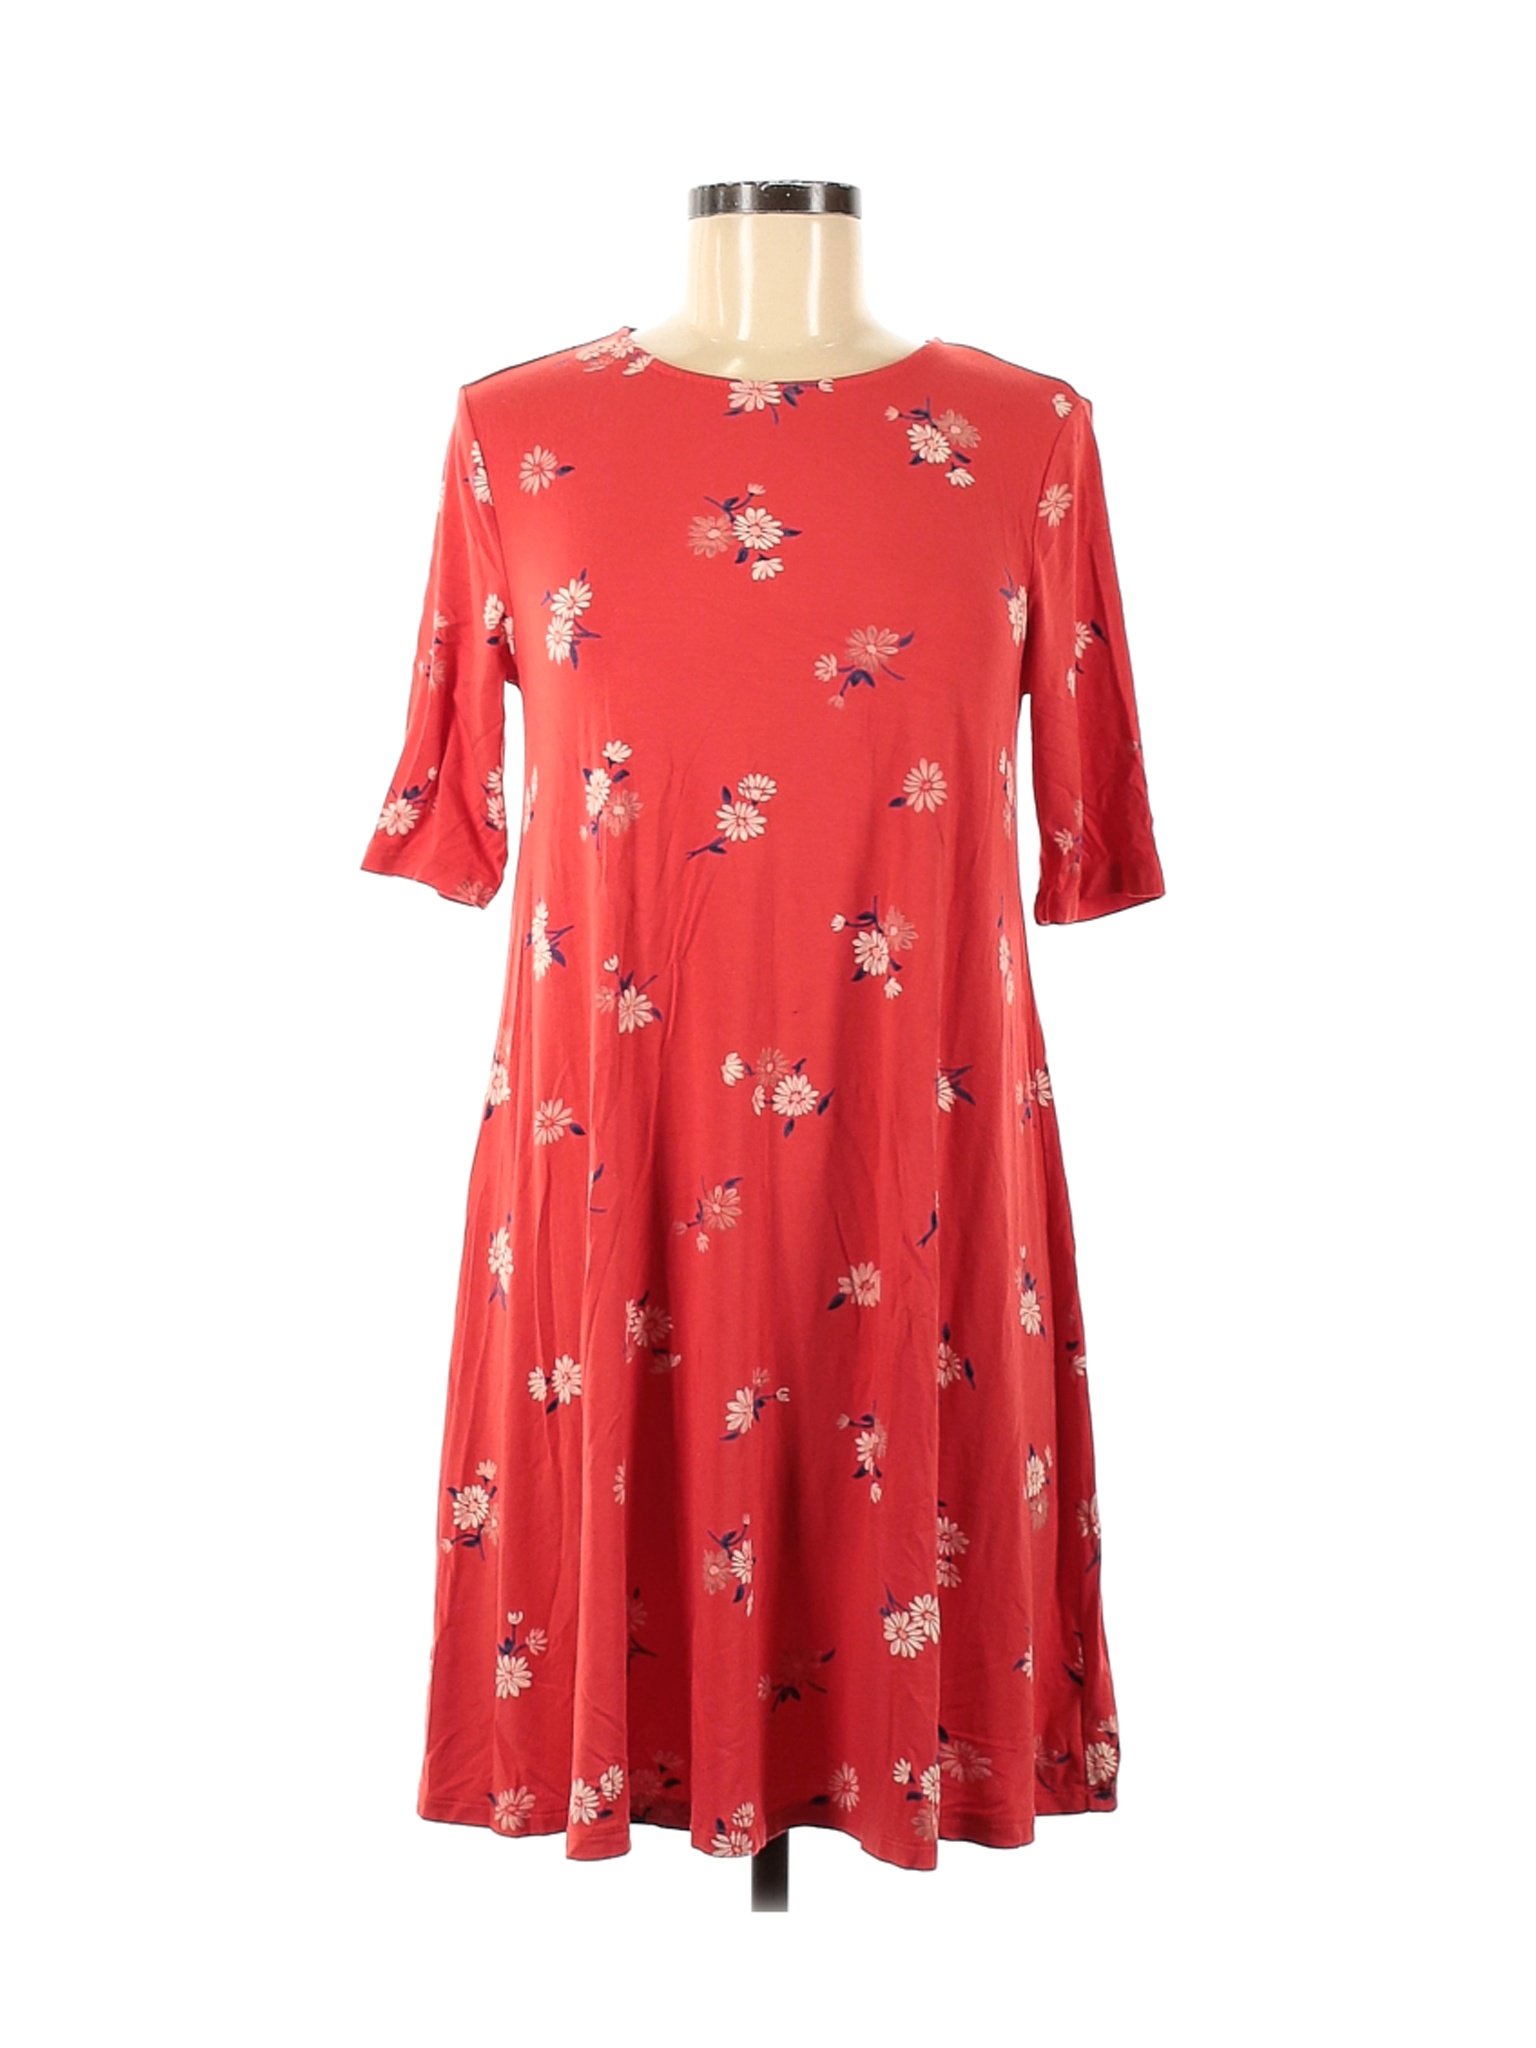 Old Navy Women Red Casual Dress M | eBay